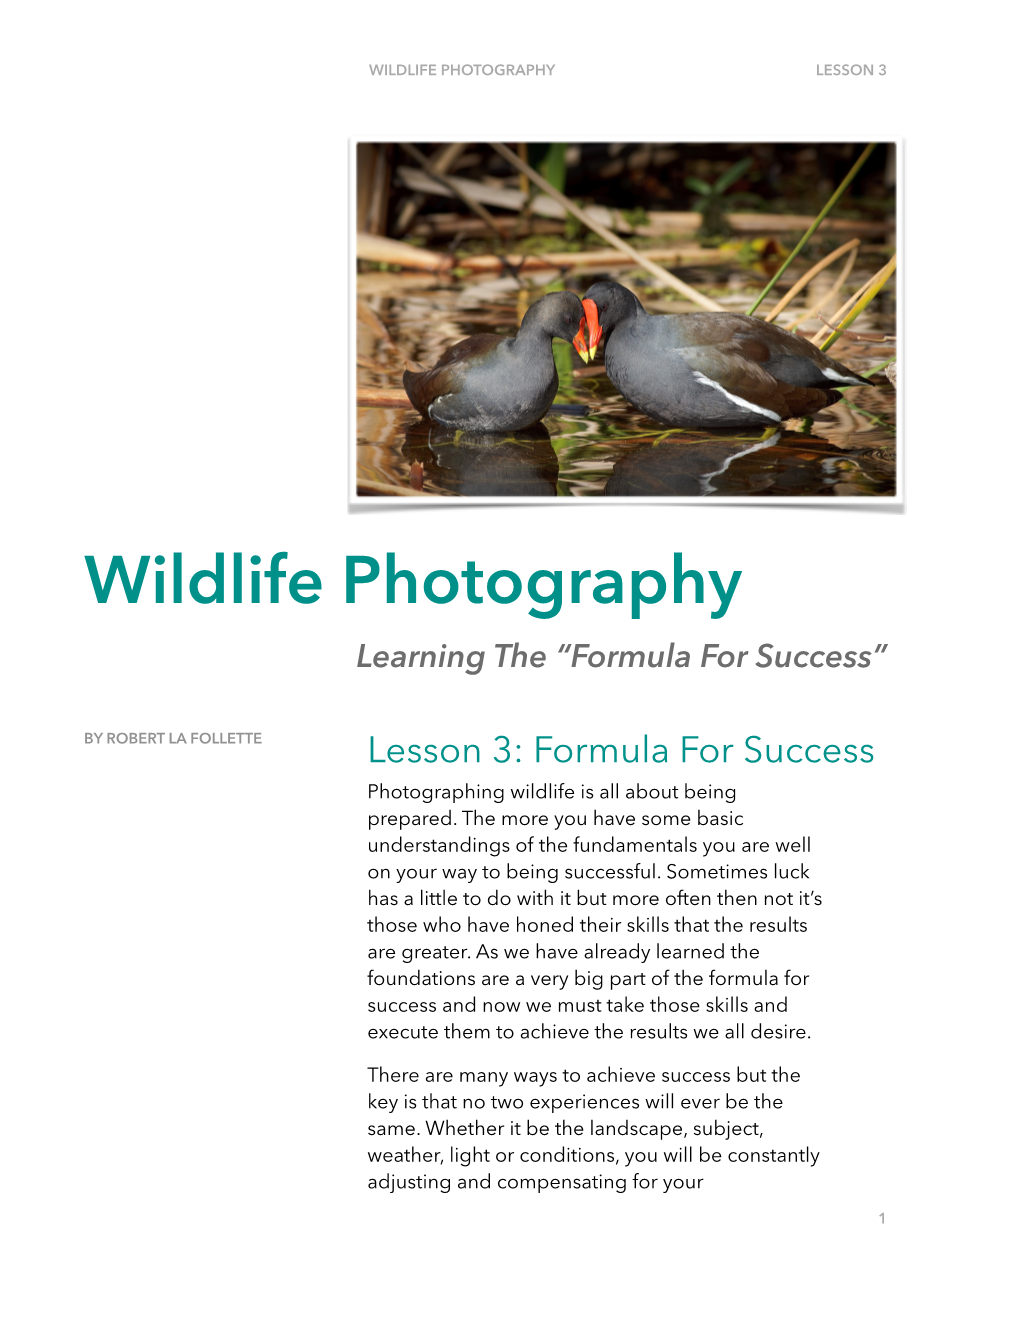 Wildlife Photography Lesson 3